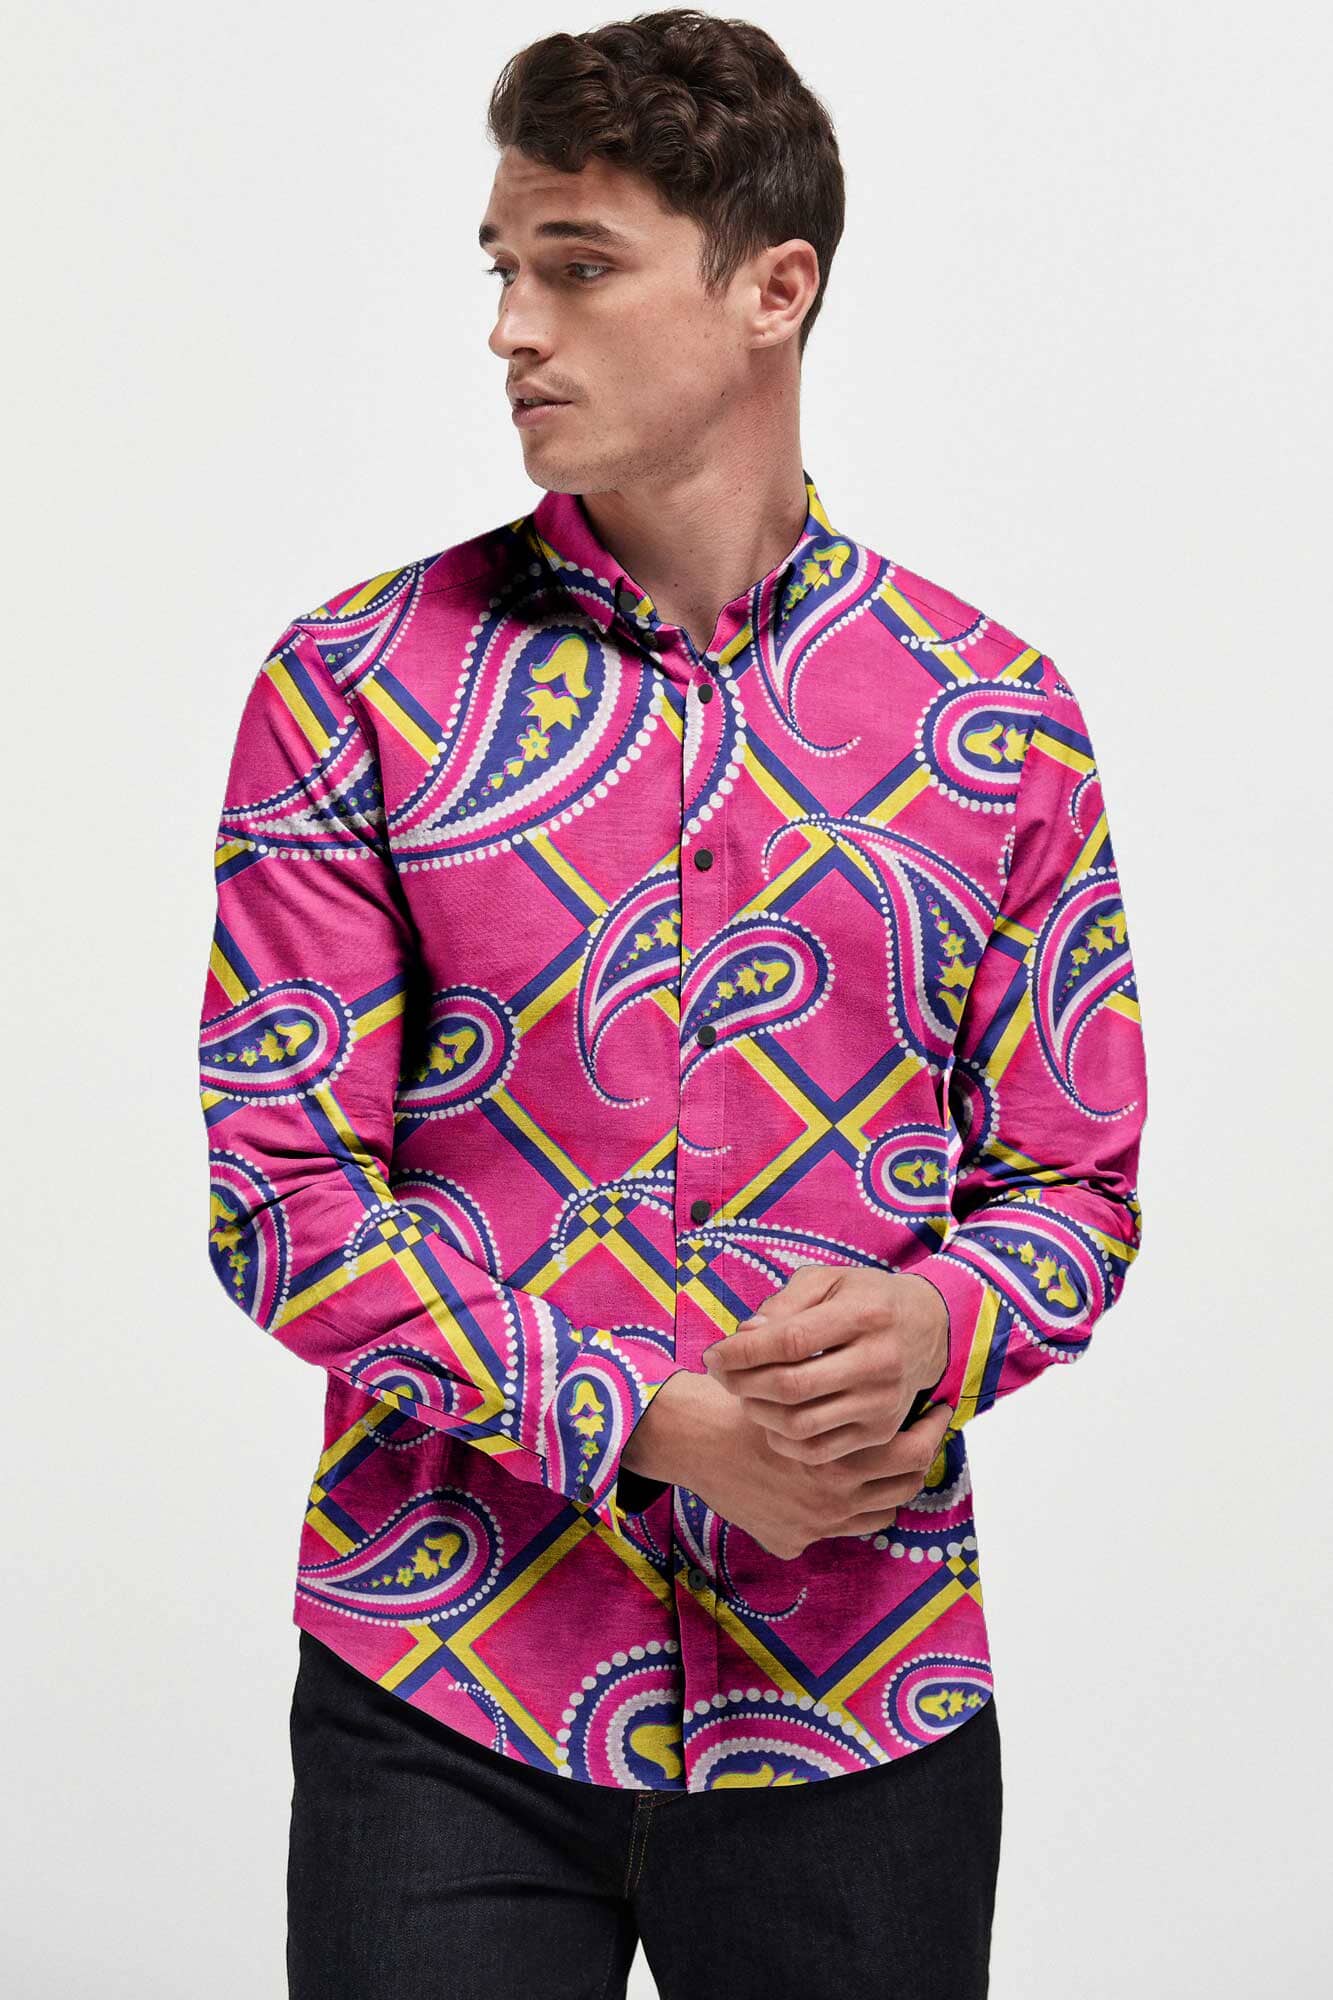 Fashion Men's Merida Printed Design Slim Fit Casual Shirt Men's Casual Shirt First Choice Hot Pink S 